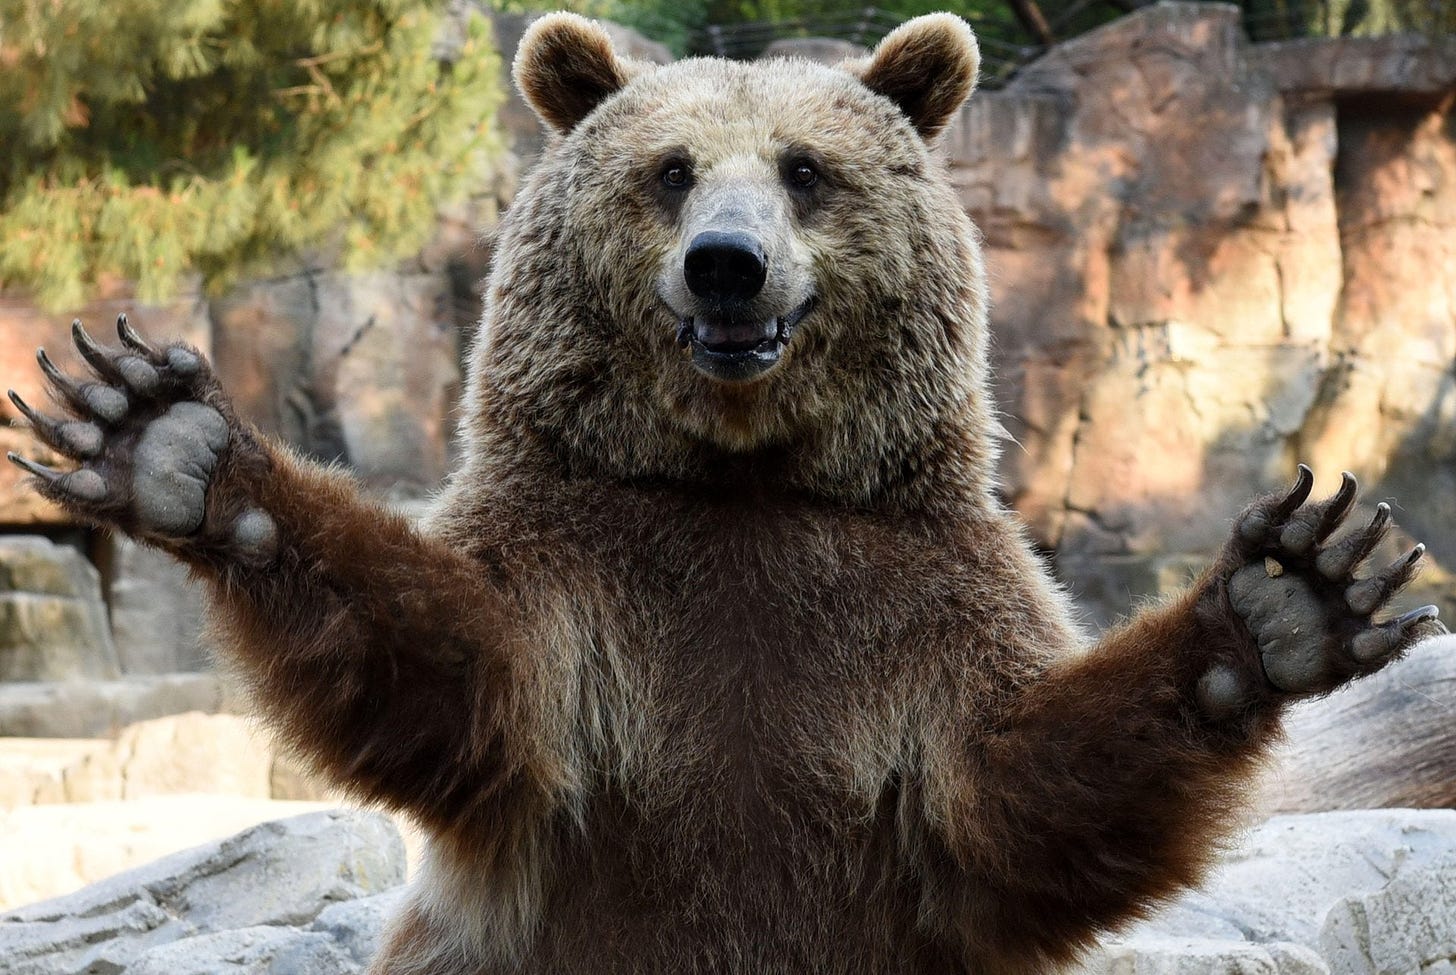 Bear hug time! : Bearswaving